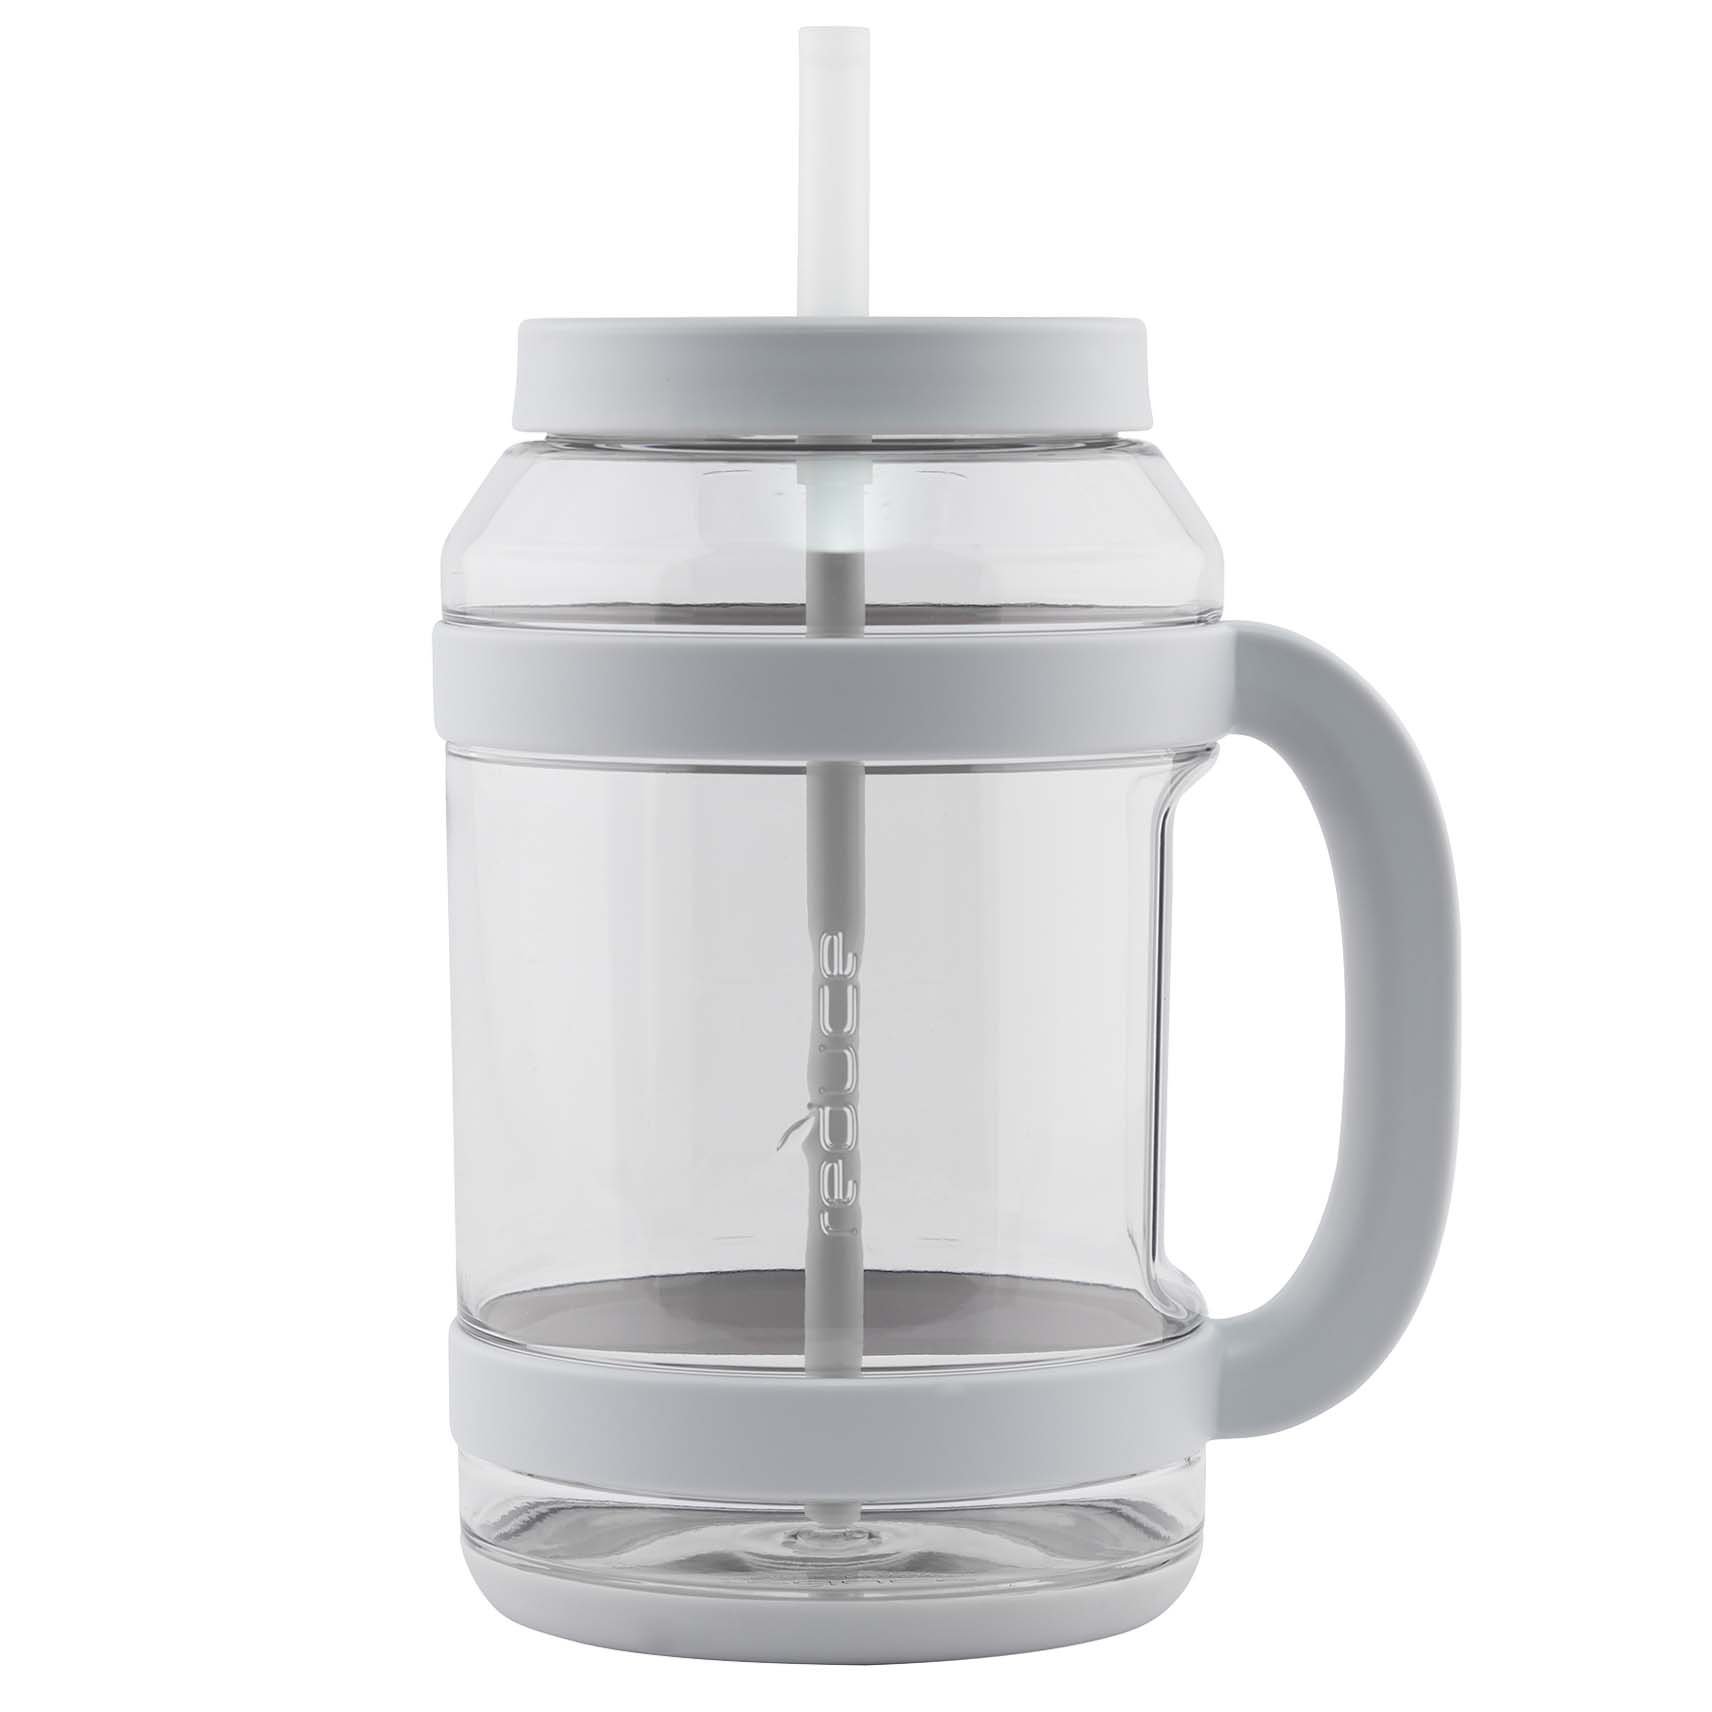 10oz Coffee Mug Hydro-Dip – Just Stick It 1